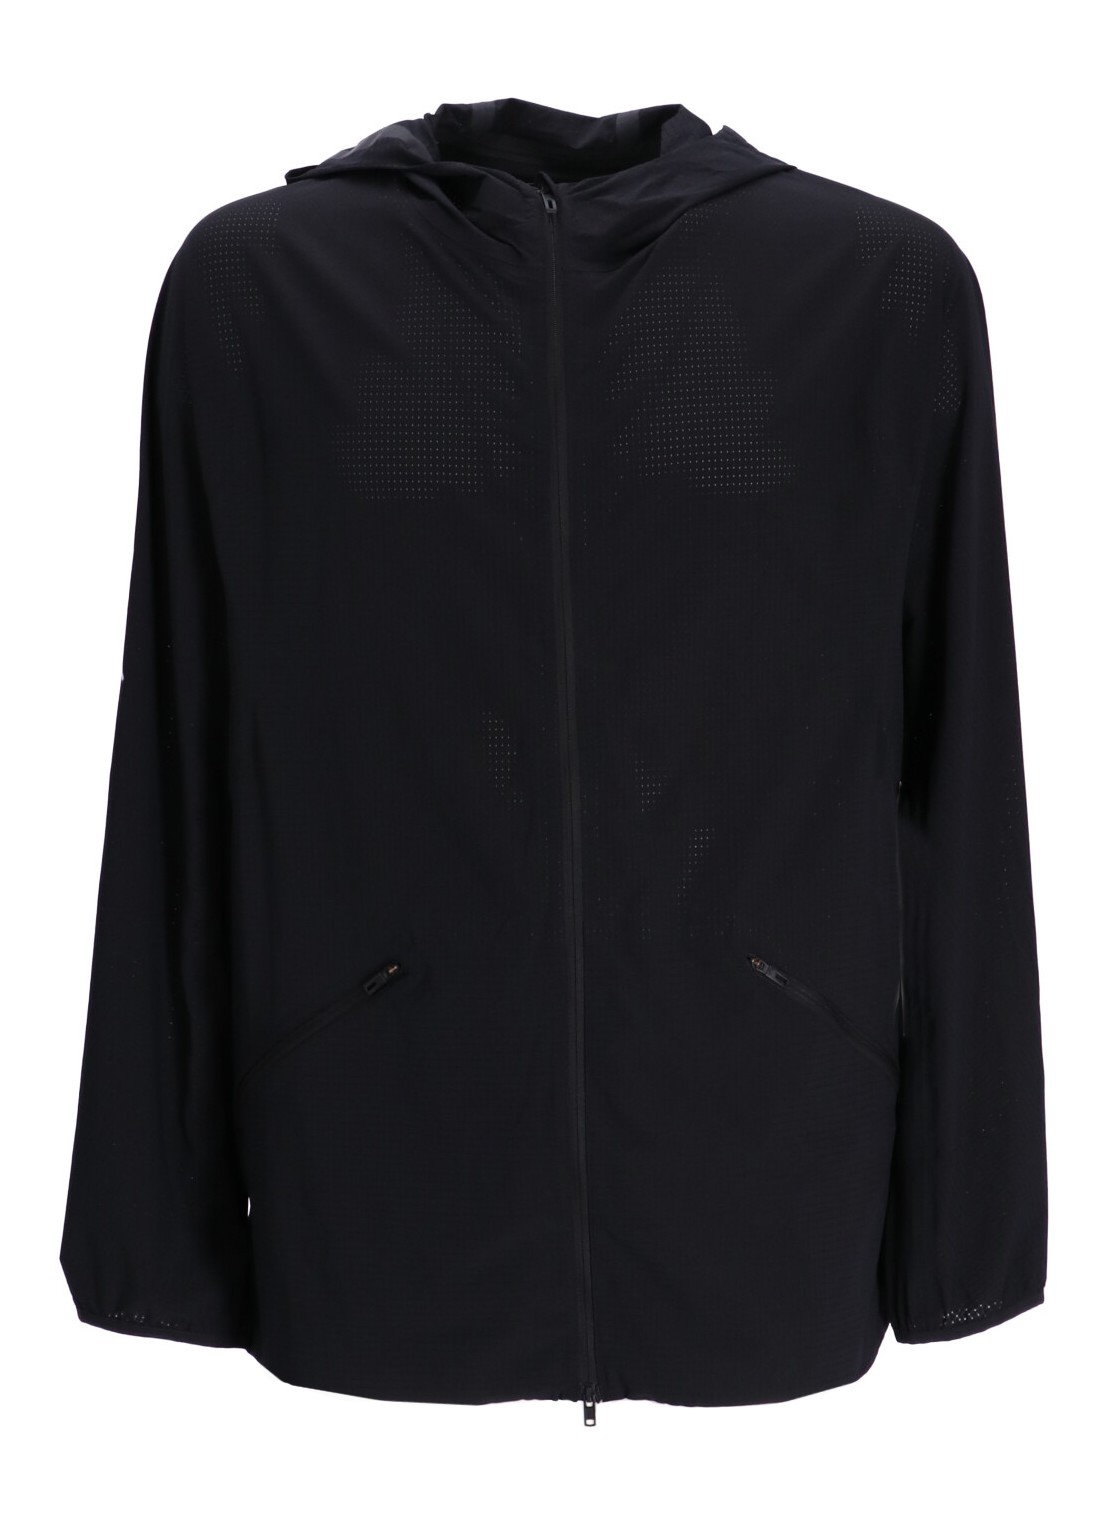 Outerwear y3 outerwear man m run jacket in8746 black talla M
 